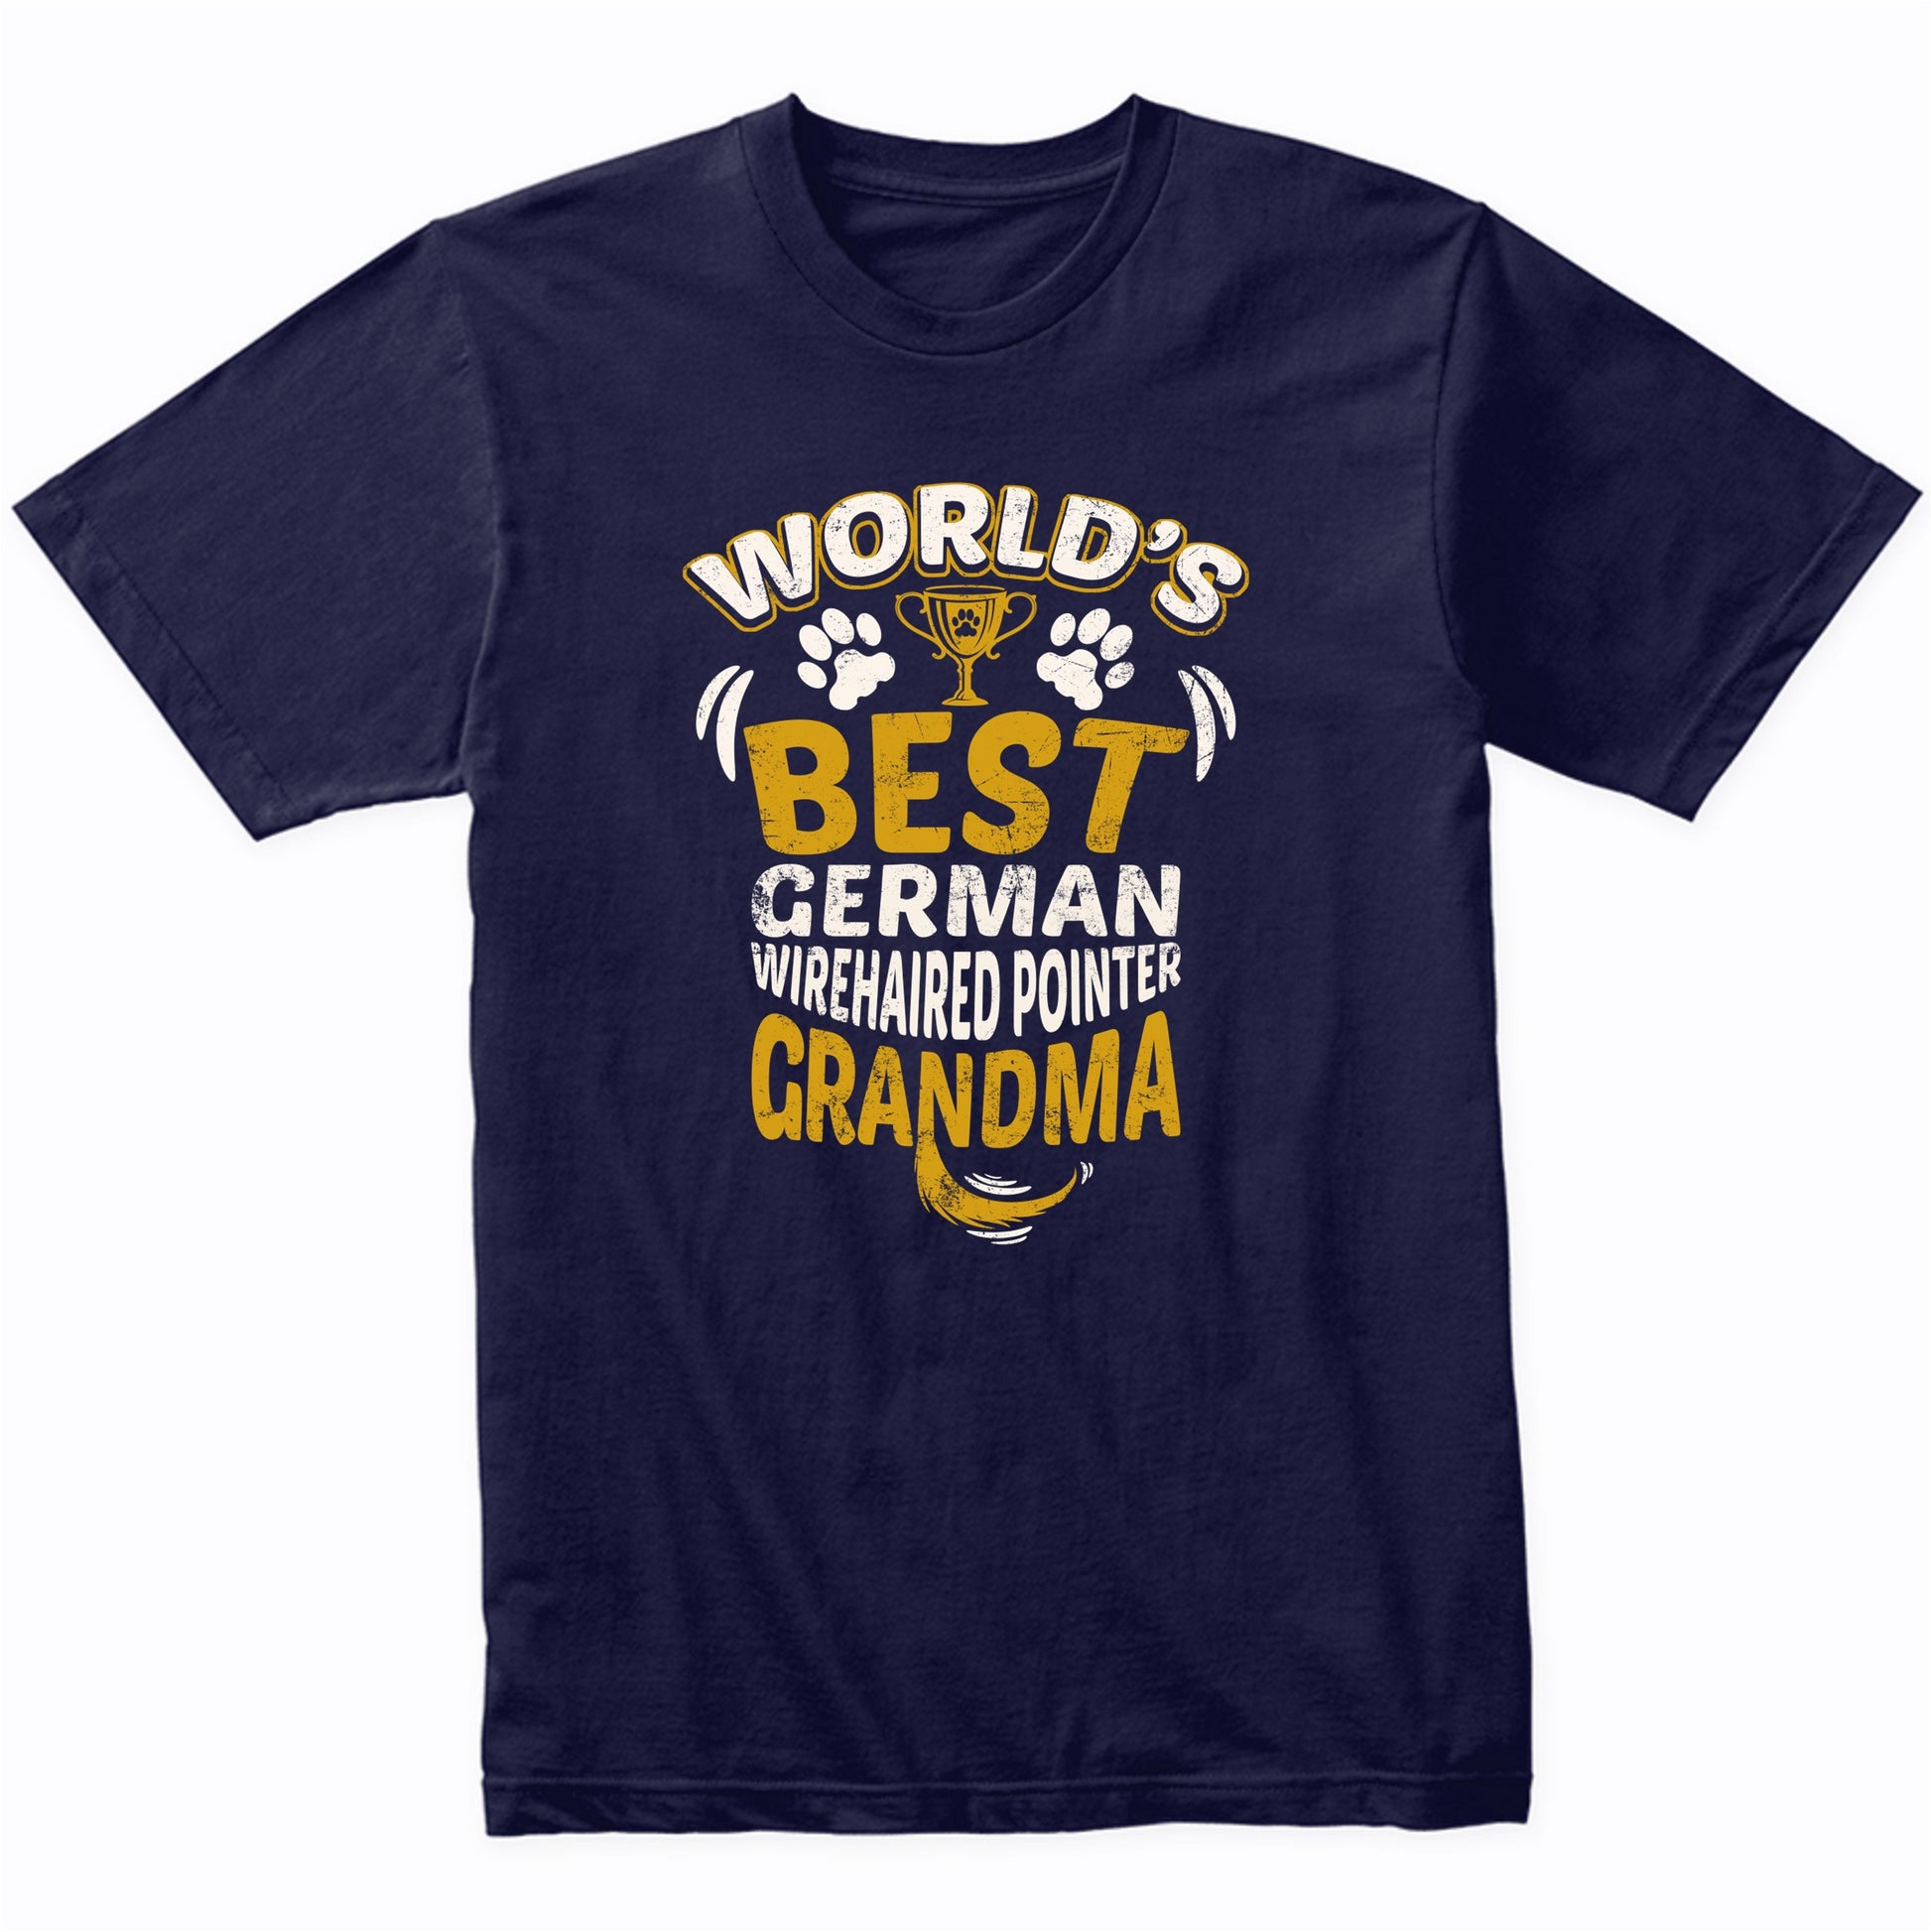 World's Best German Wirehaired Pointer Grandma T-Shirt